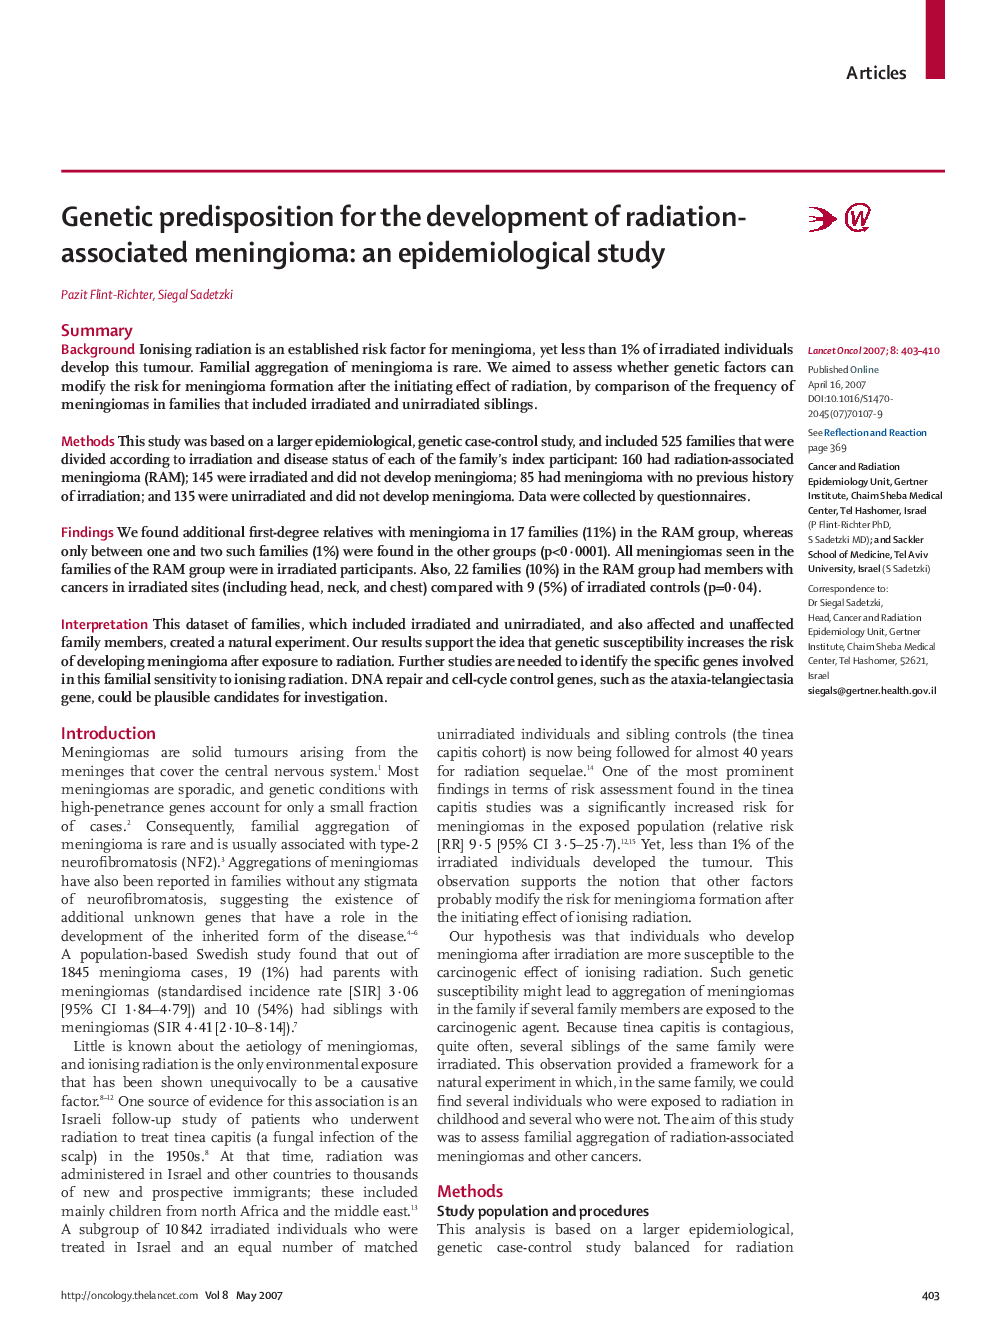 Genetic predisposition for the development of radiation-associated meningioma: an epidemiological study